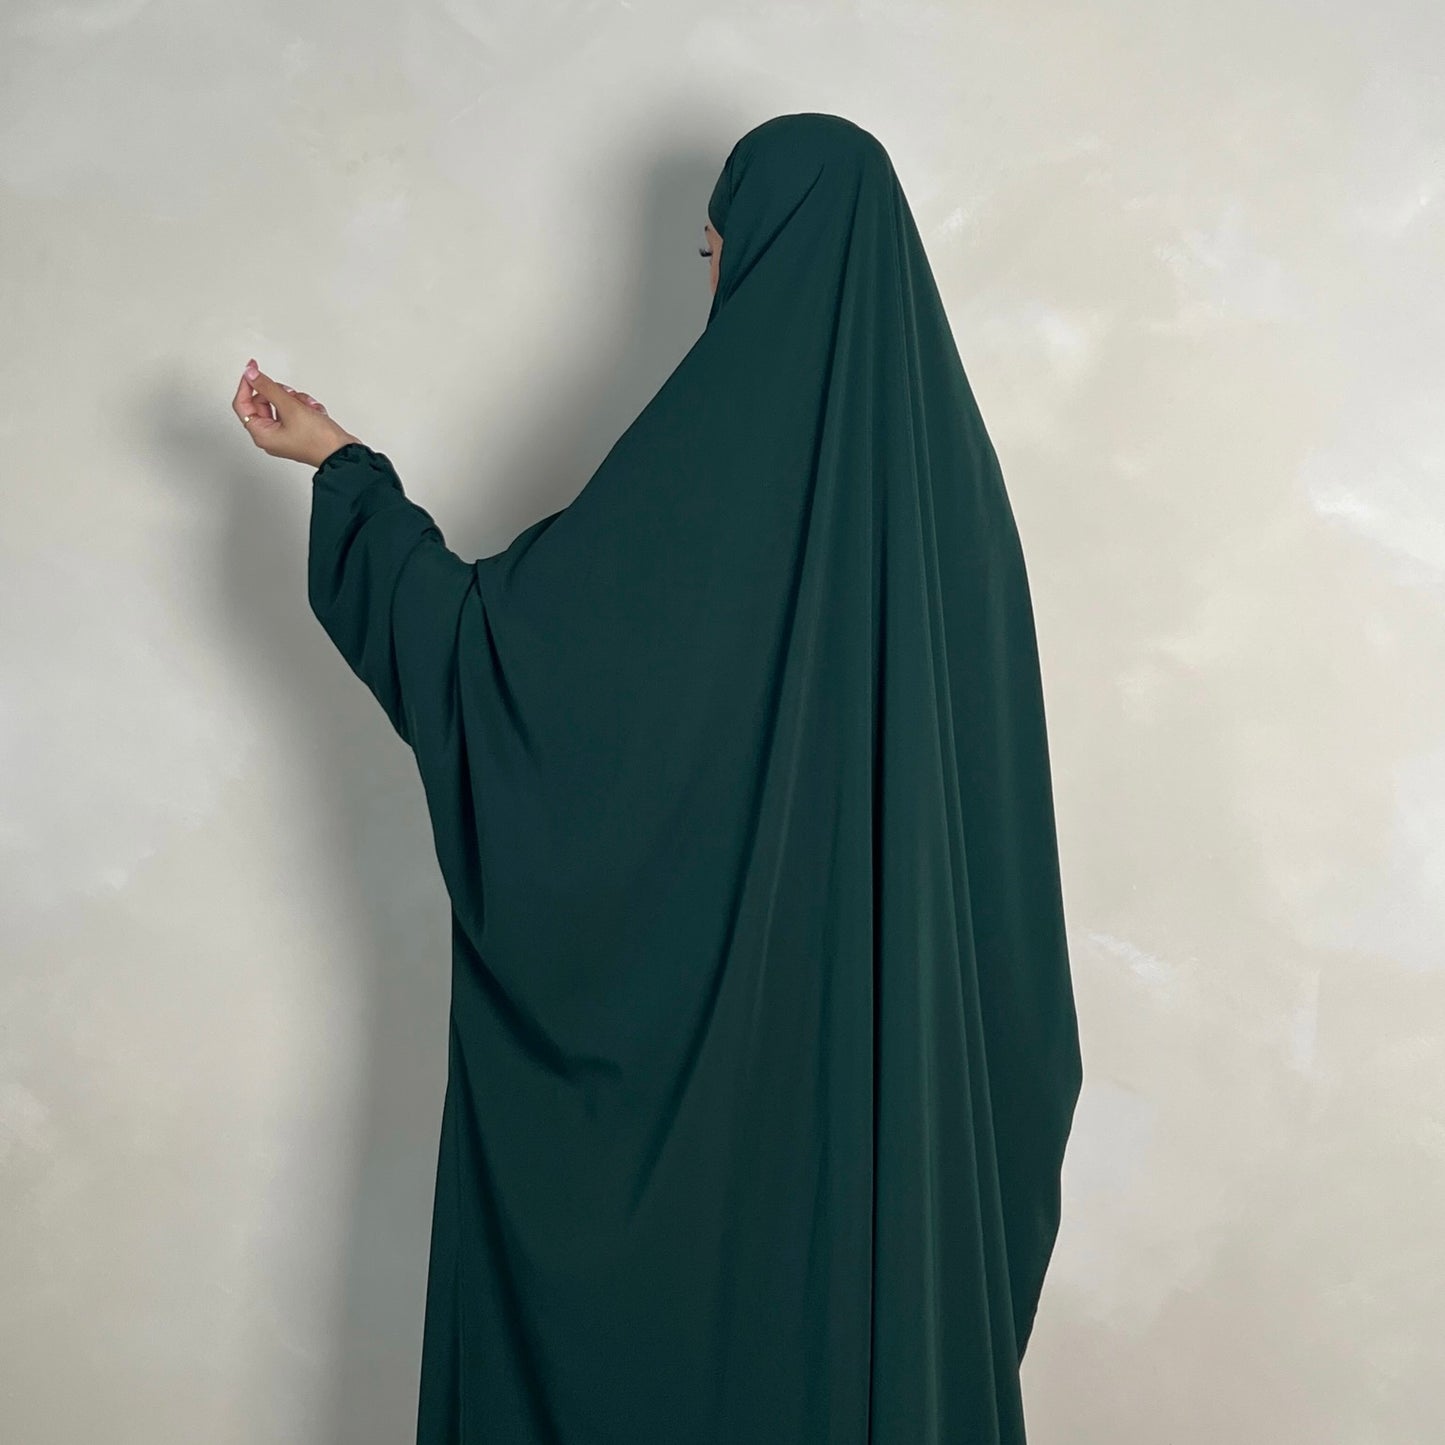 1pc Jilbab with Niqab Ties Bottle Green